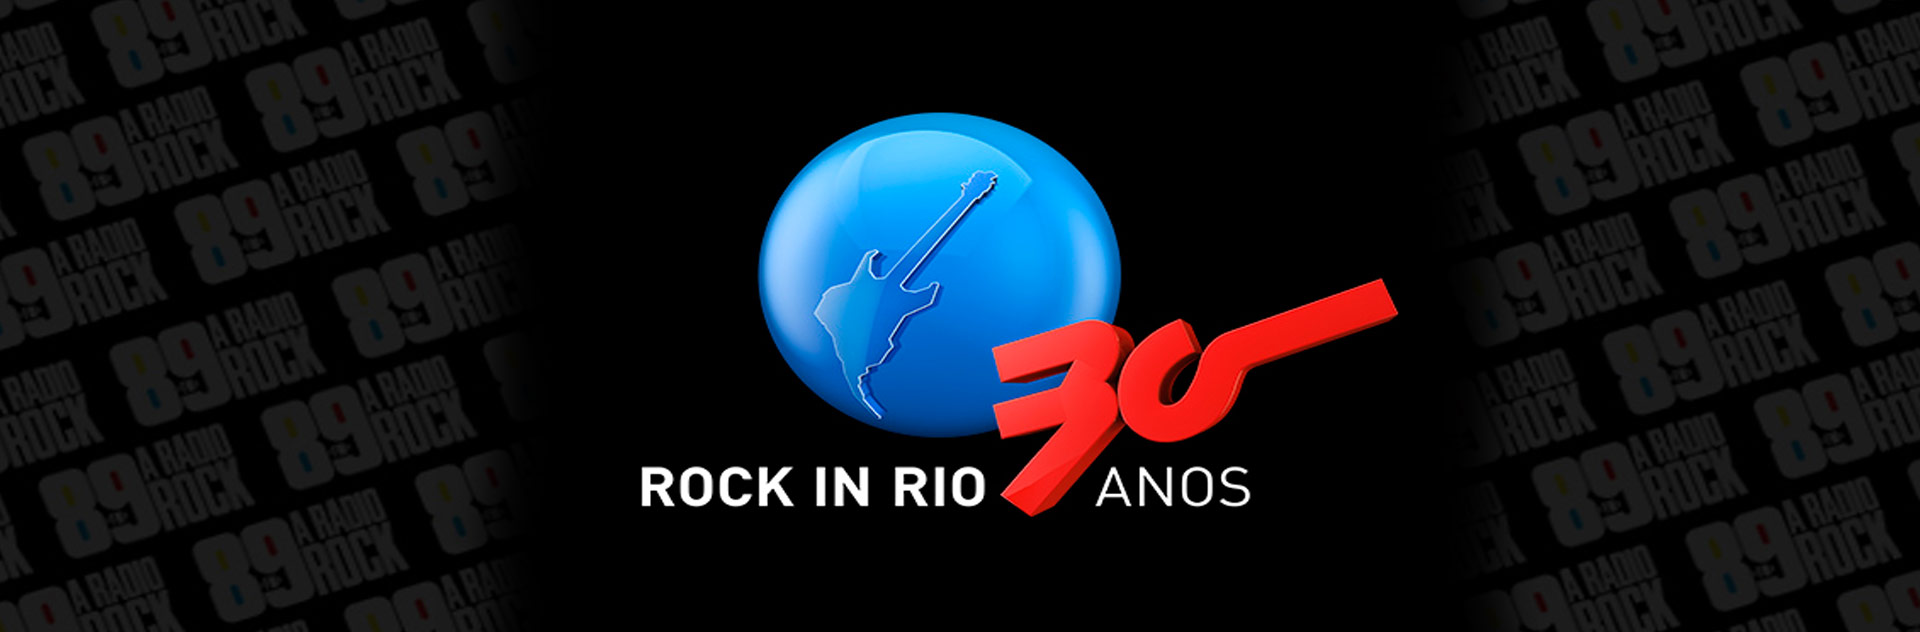 Prepare-se para o Rock in Rio:  Queen + Adam Lambert